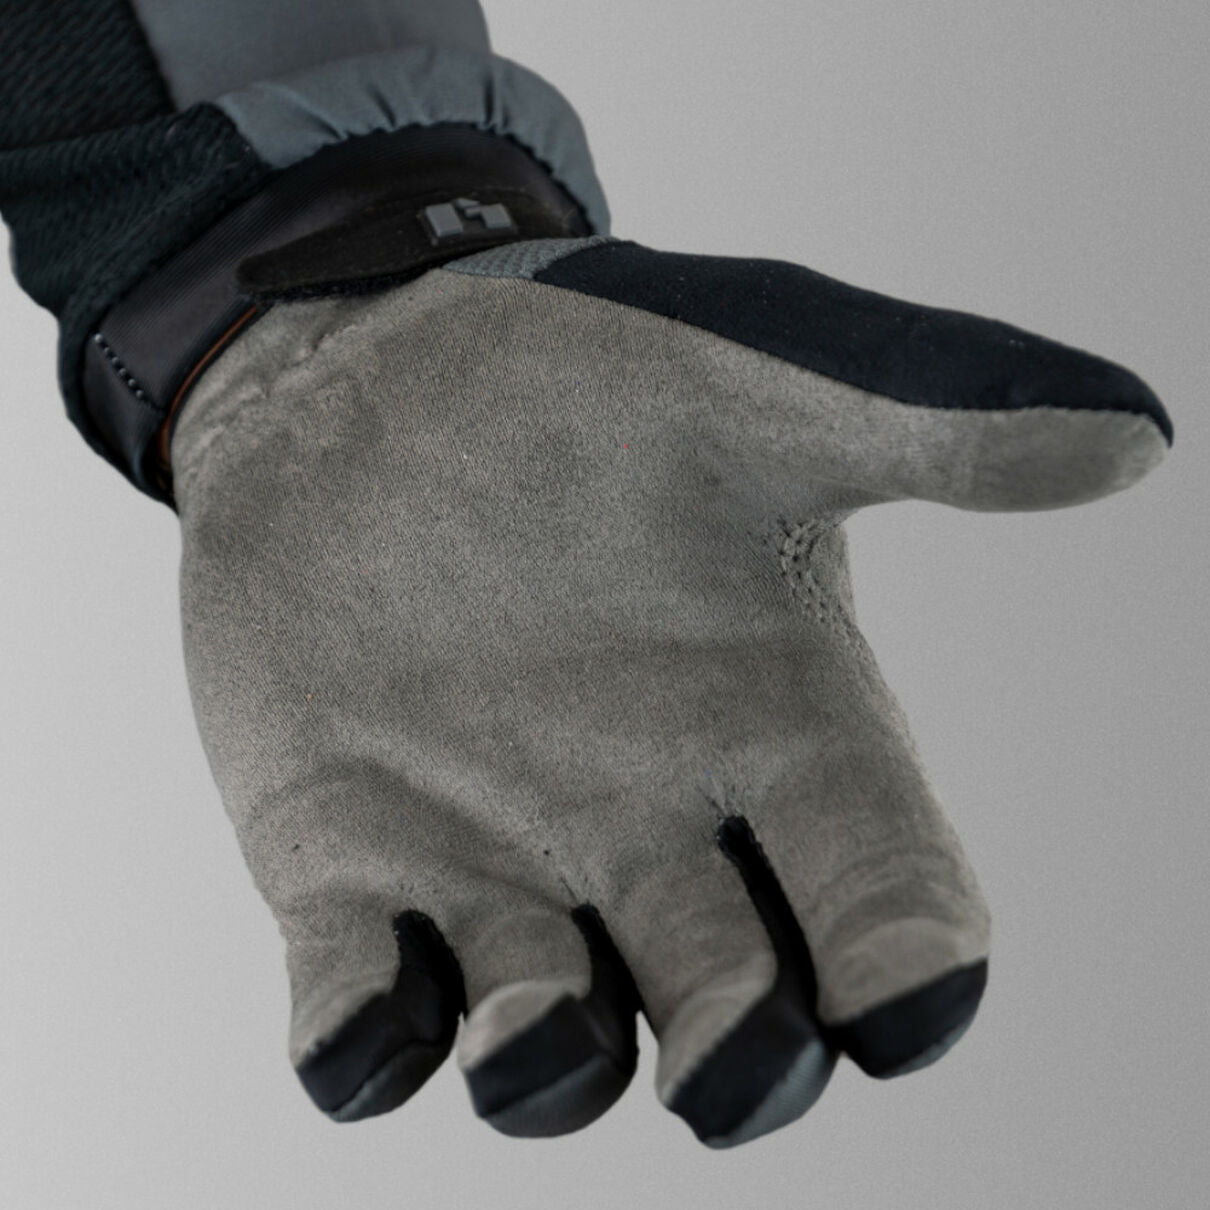 Hebo Trials Glove Nano Pro Grey